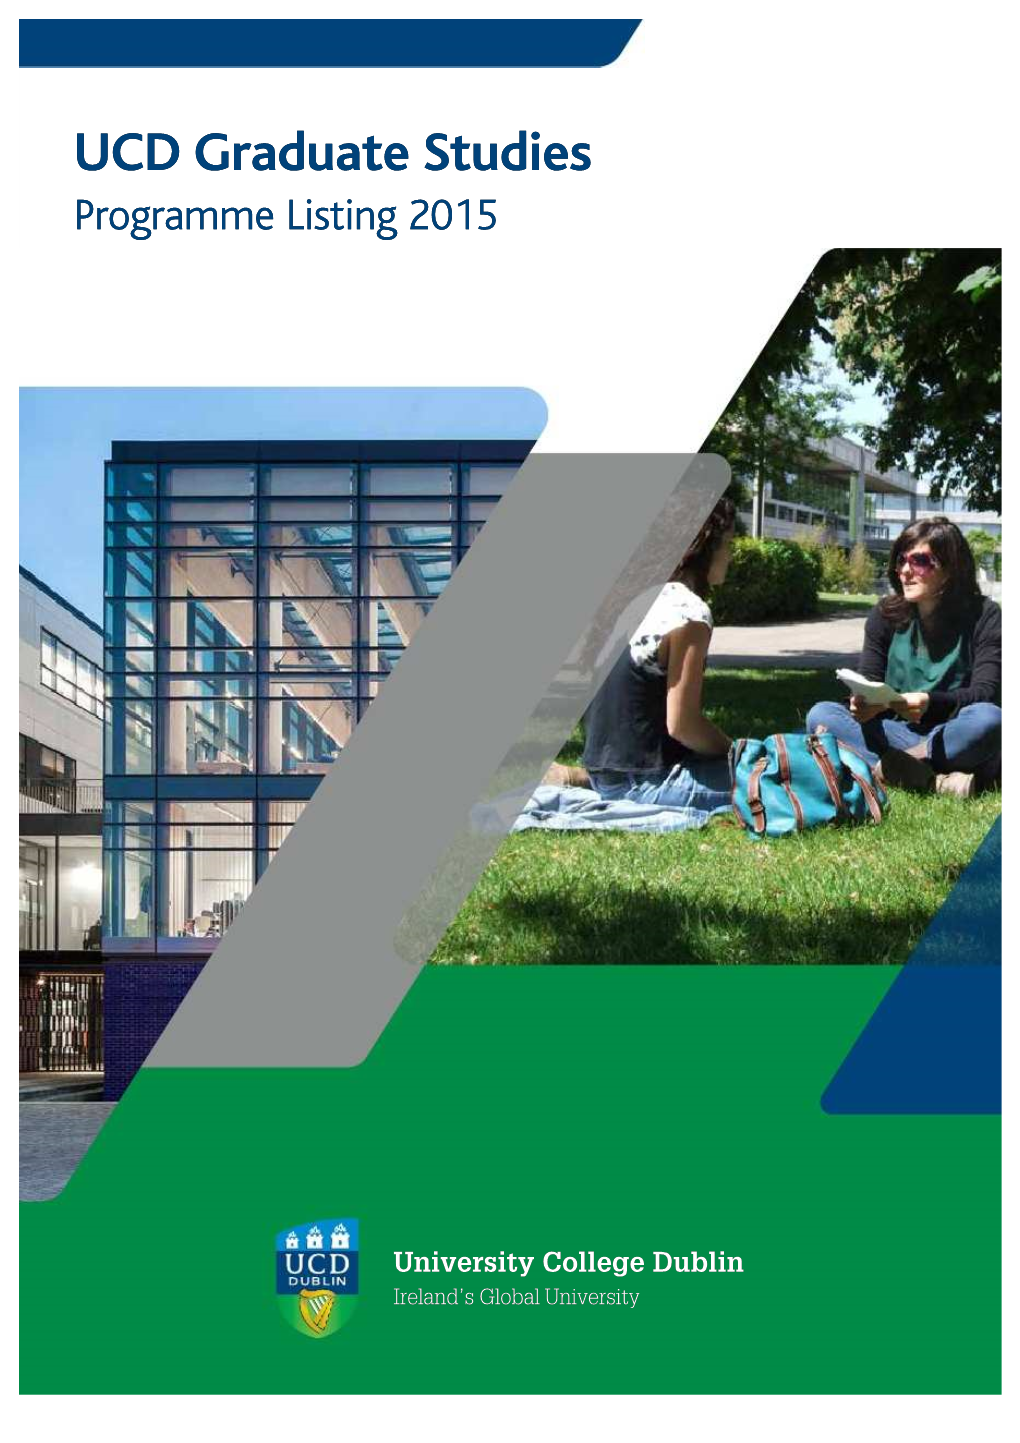 UCD Graduate Studies Programme Listing 2015